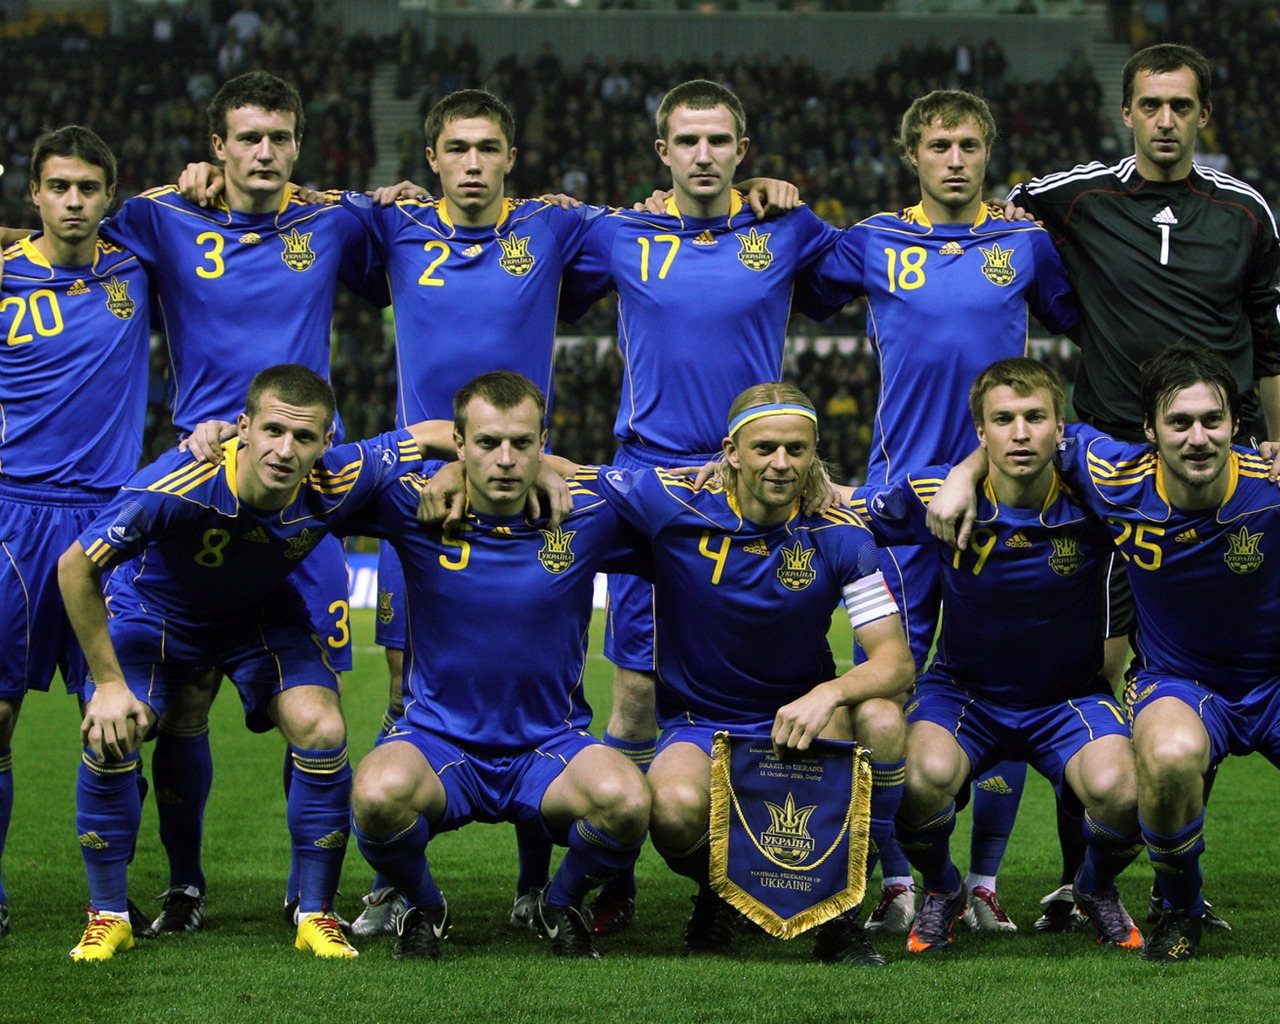 Ukraine National Team for 1280 x 1024 resolution